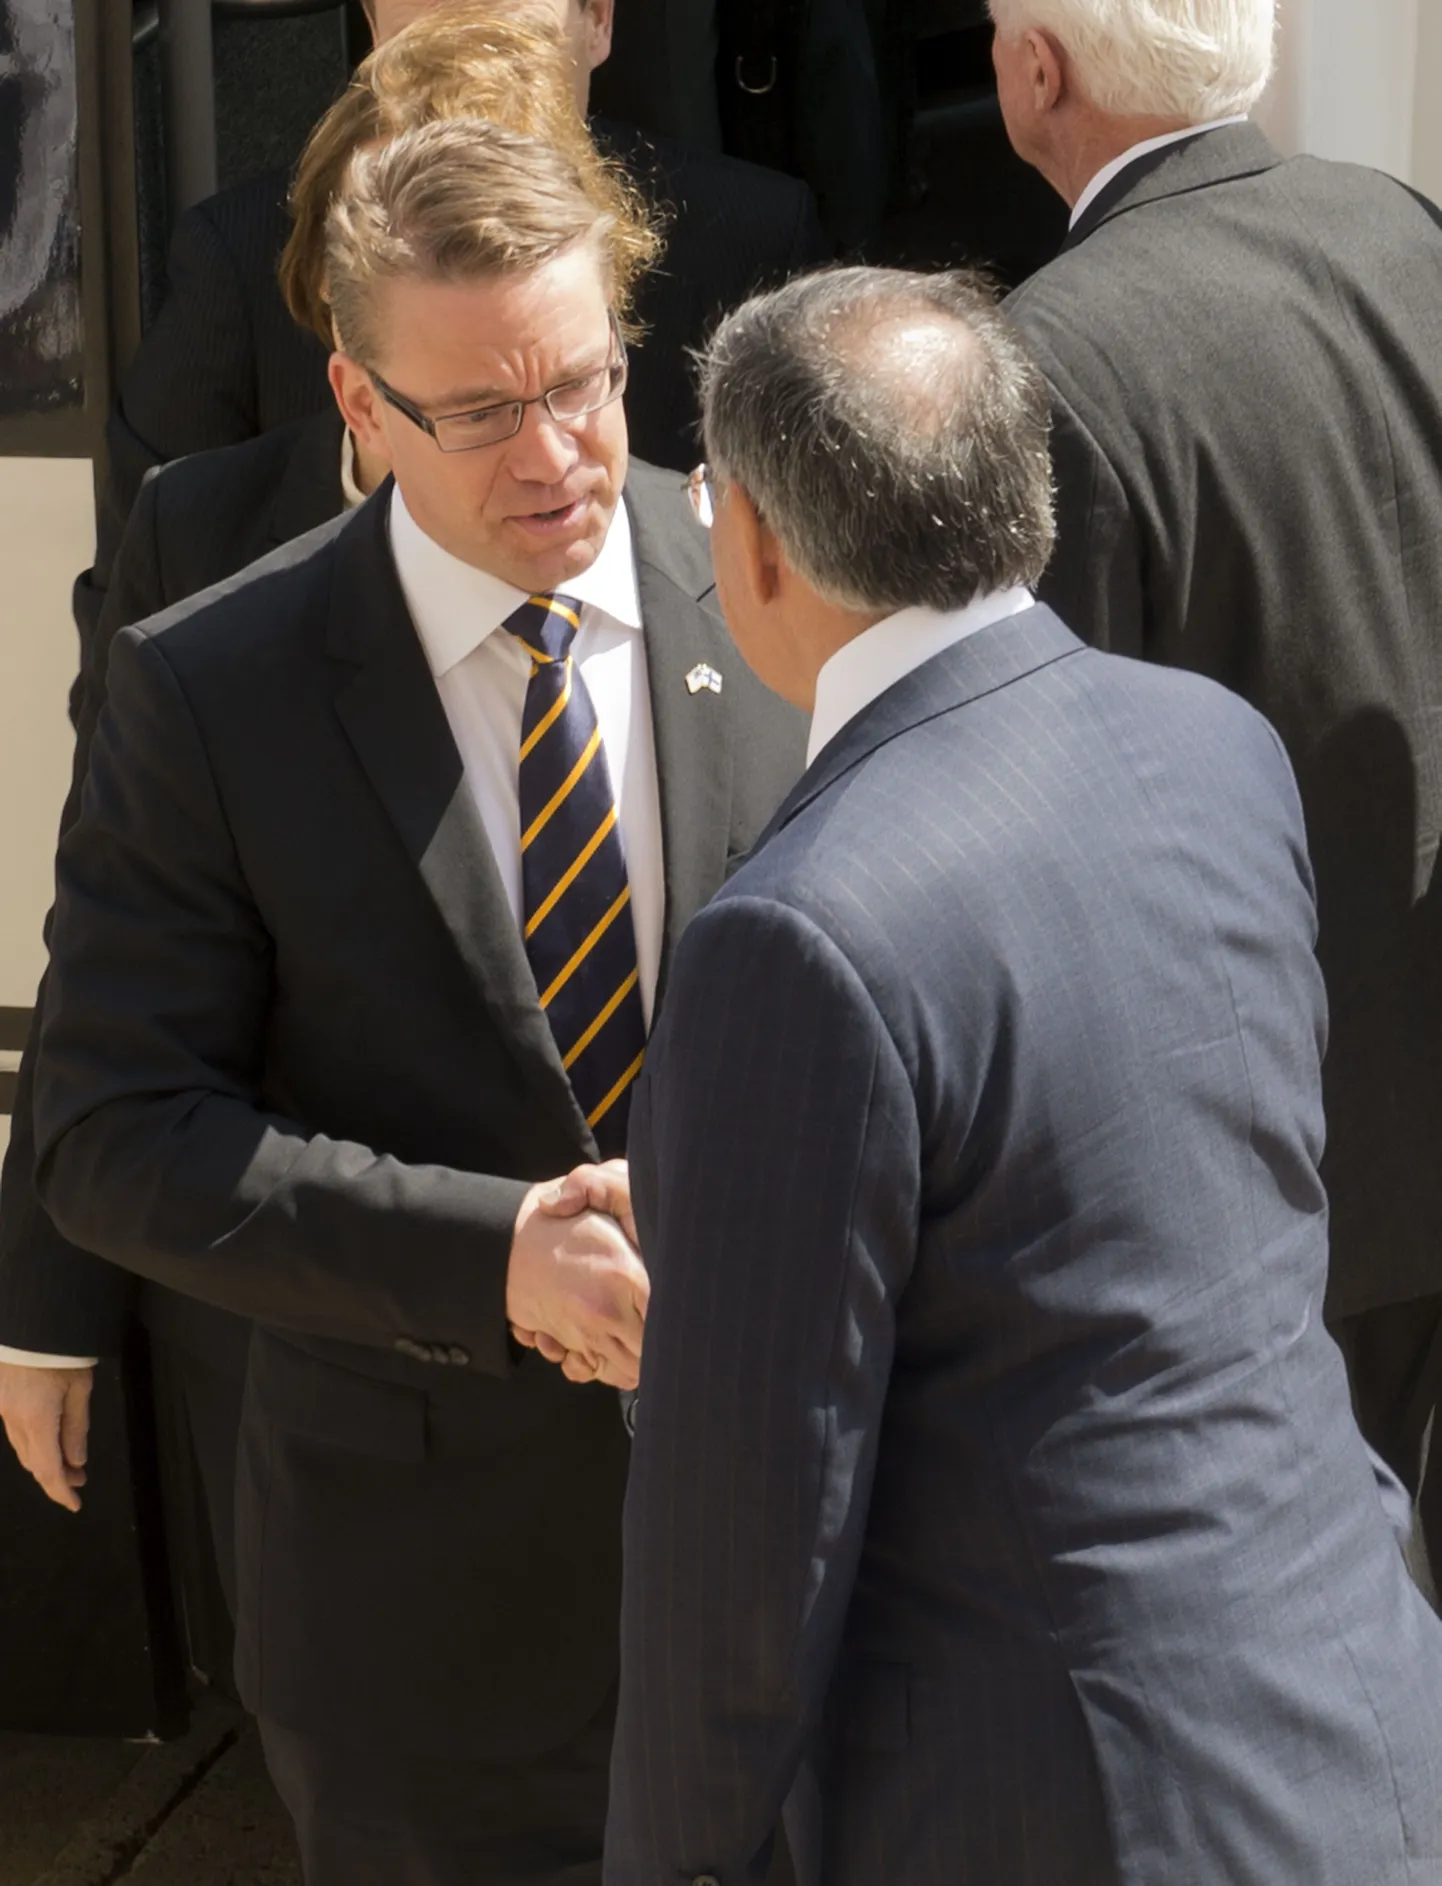 Soome kaitseminister Stefan Wallin kätleb USA kaitseministri Leon Panettaga (paremal).